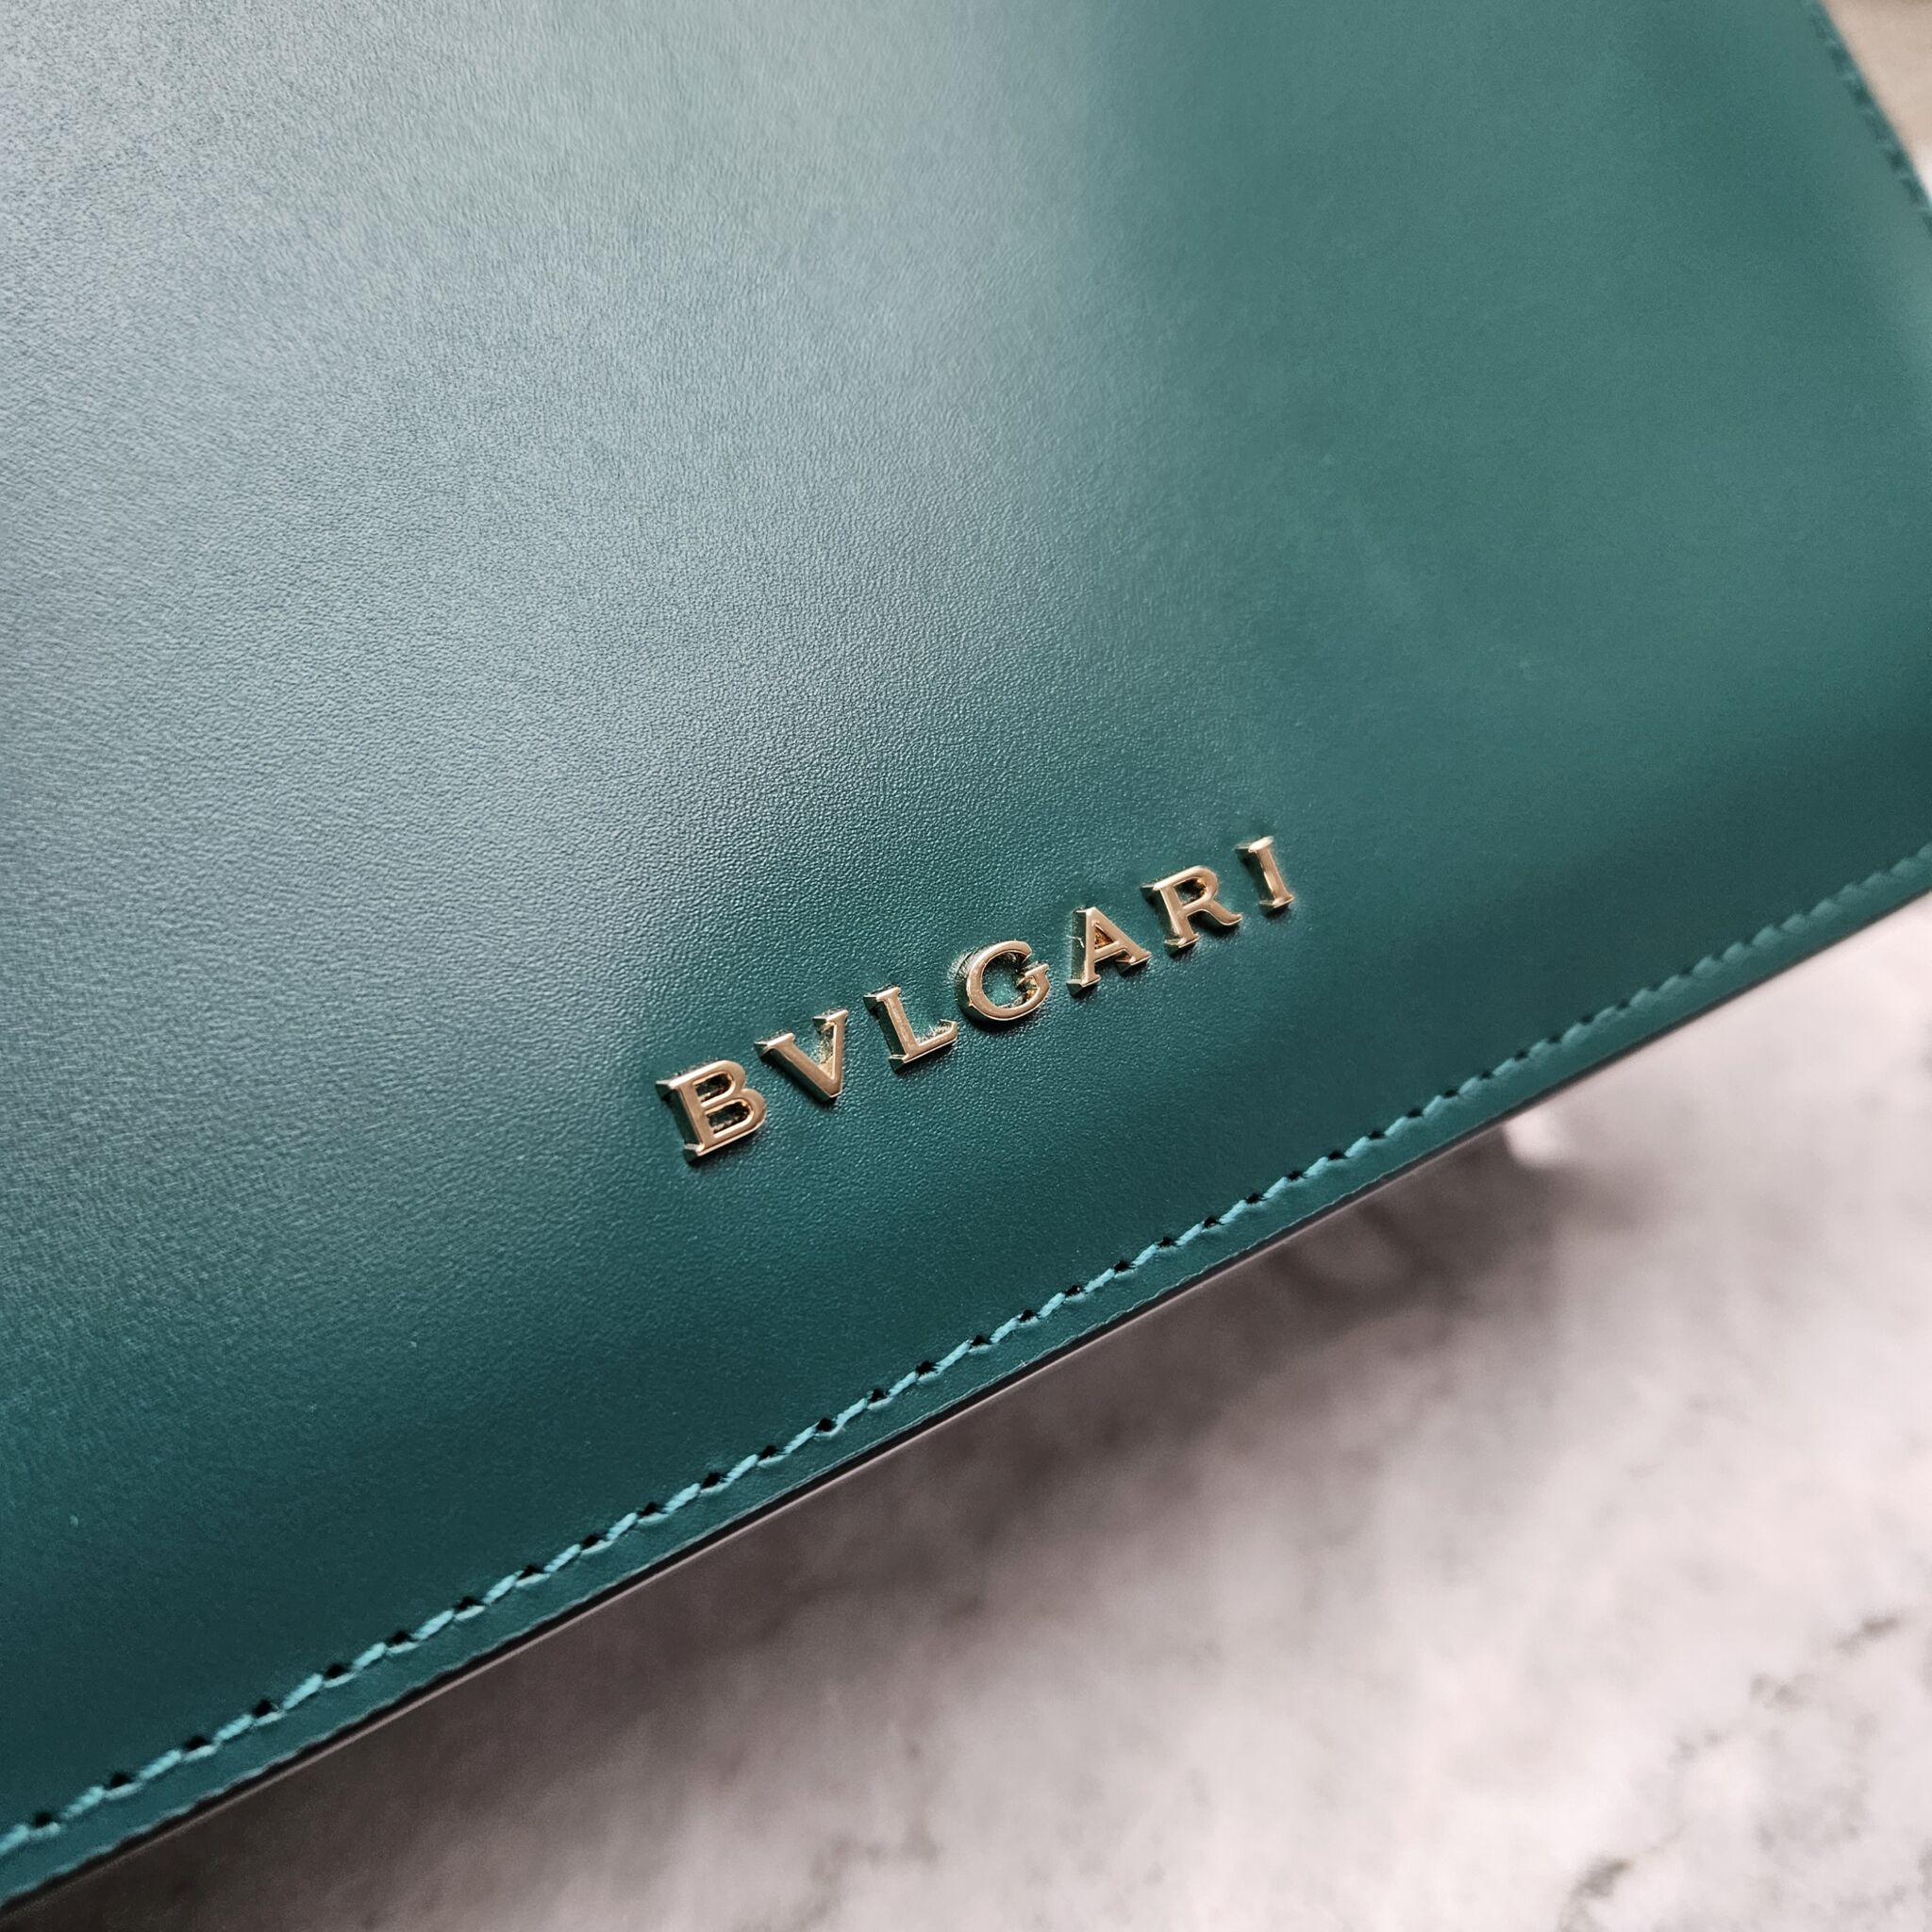 Bulgari Forever Serpenti Bag, Kalveskind, Emerald Green GHW - Laulay Luxury